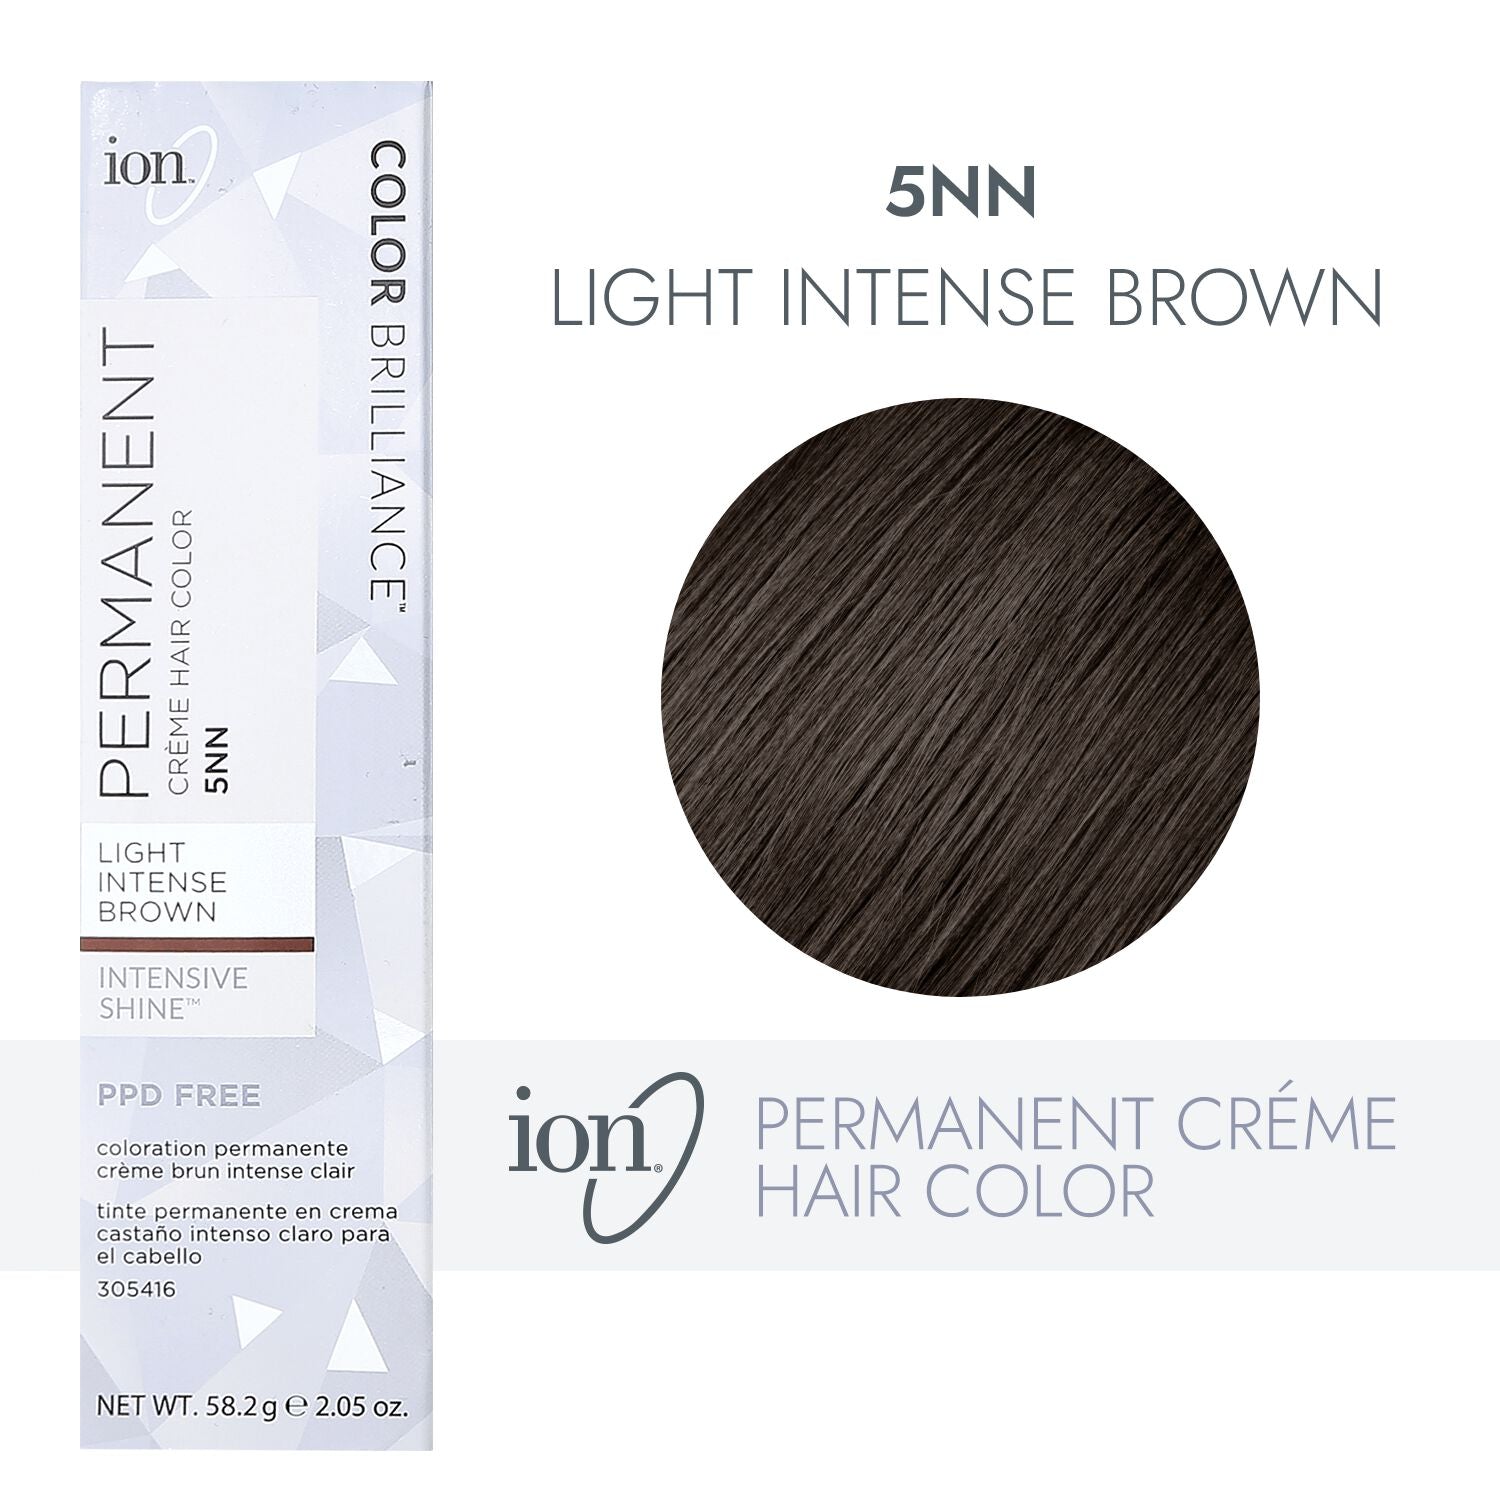 ion Permanent Creme Intense Neutrals 5NN Light Intense Brown